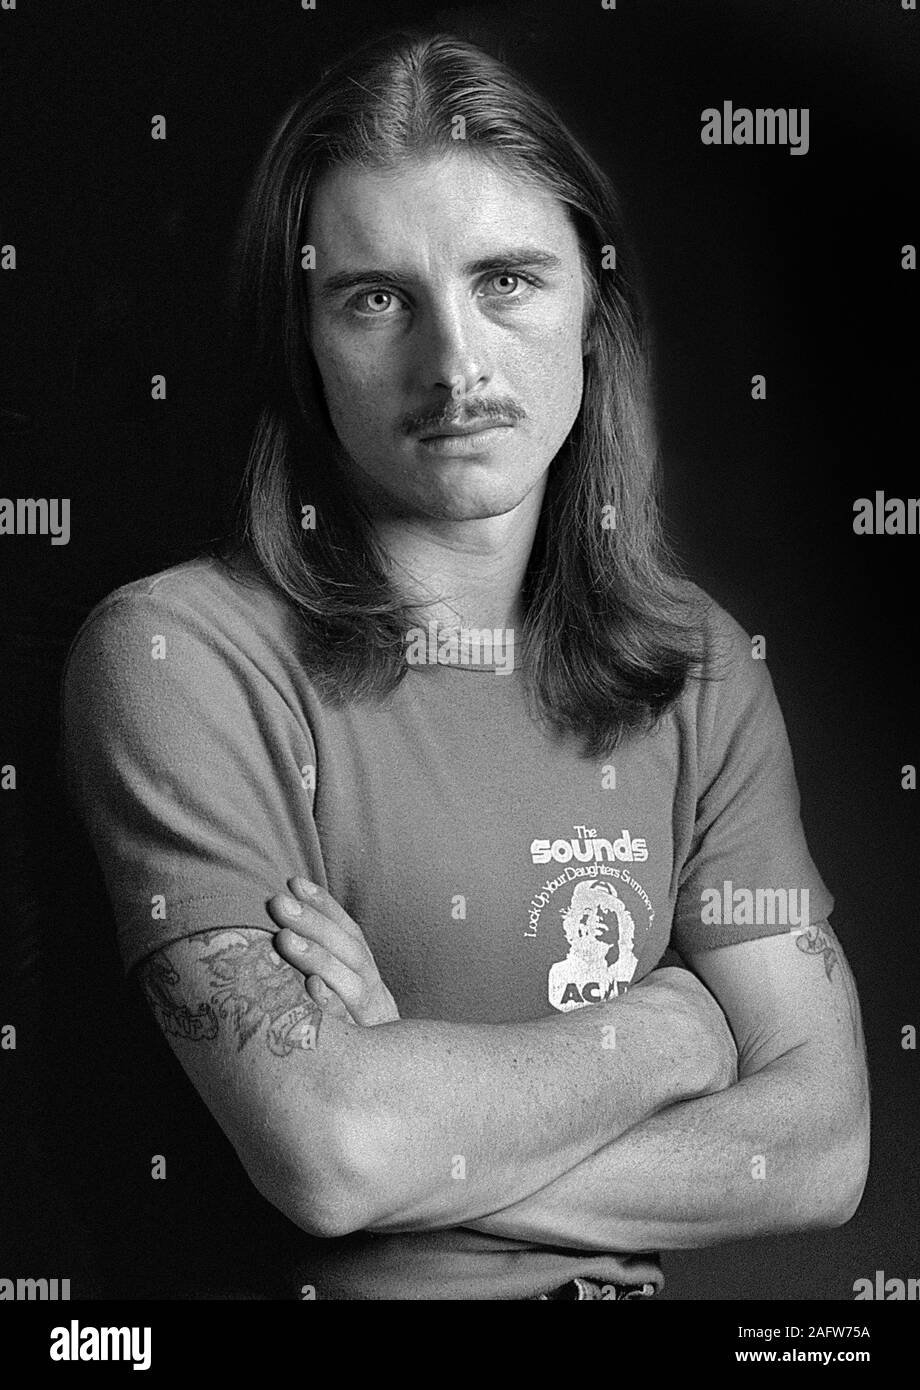 Phil Rudd batterista di AC/DC 1976 Foto stock - Alamy